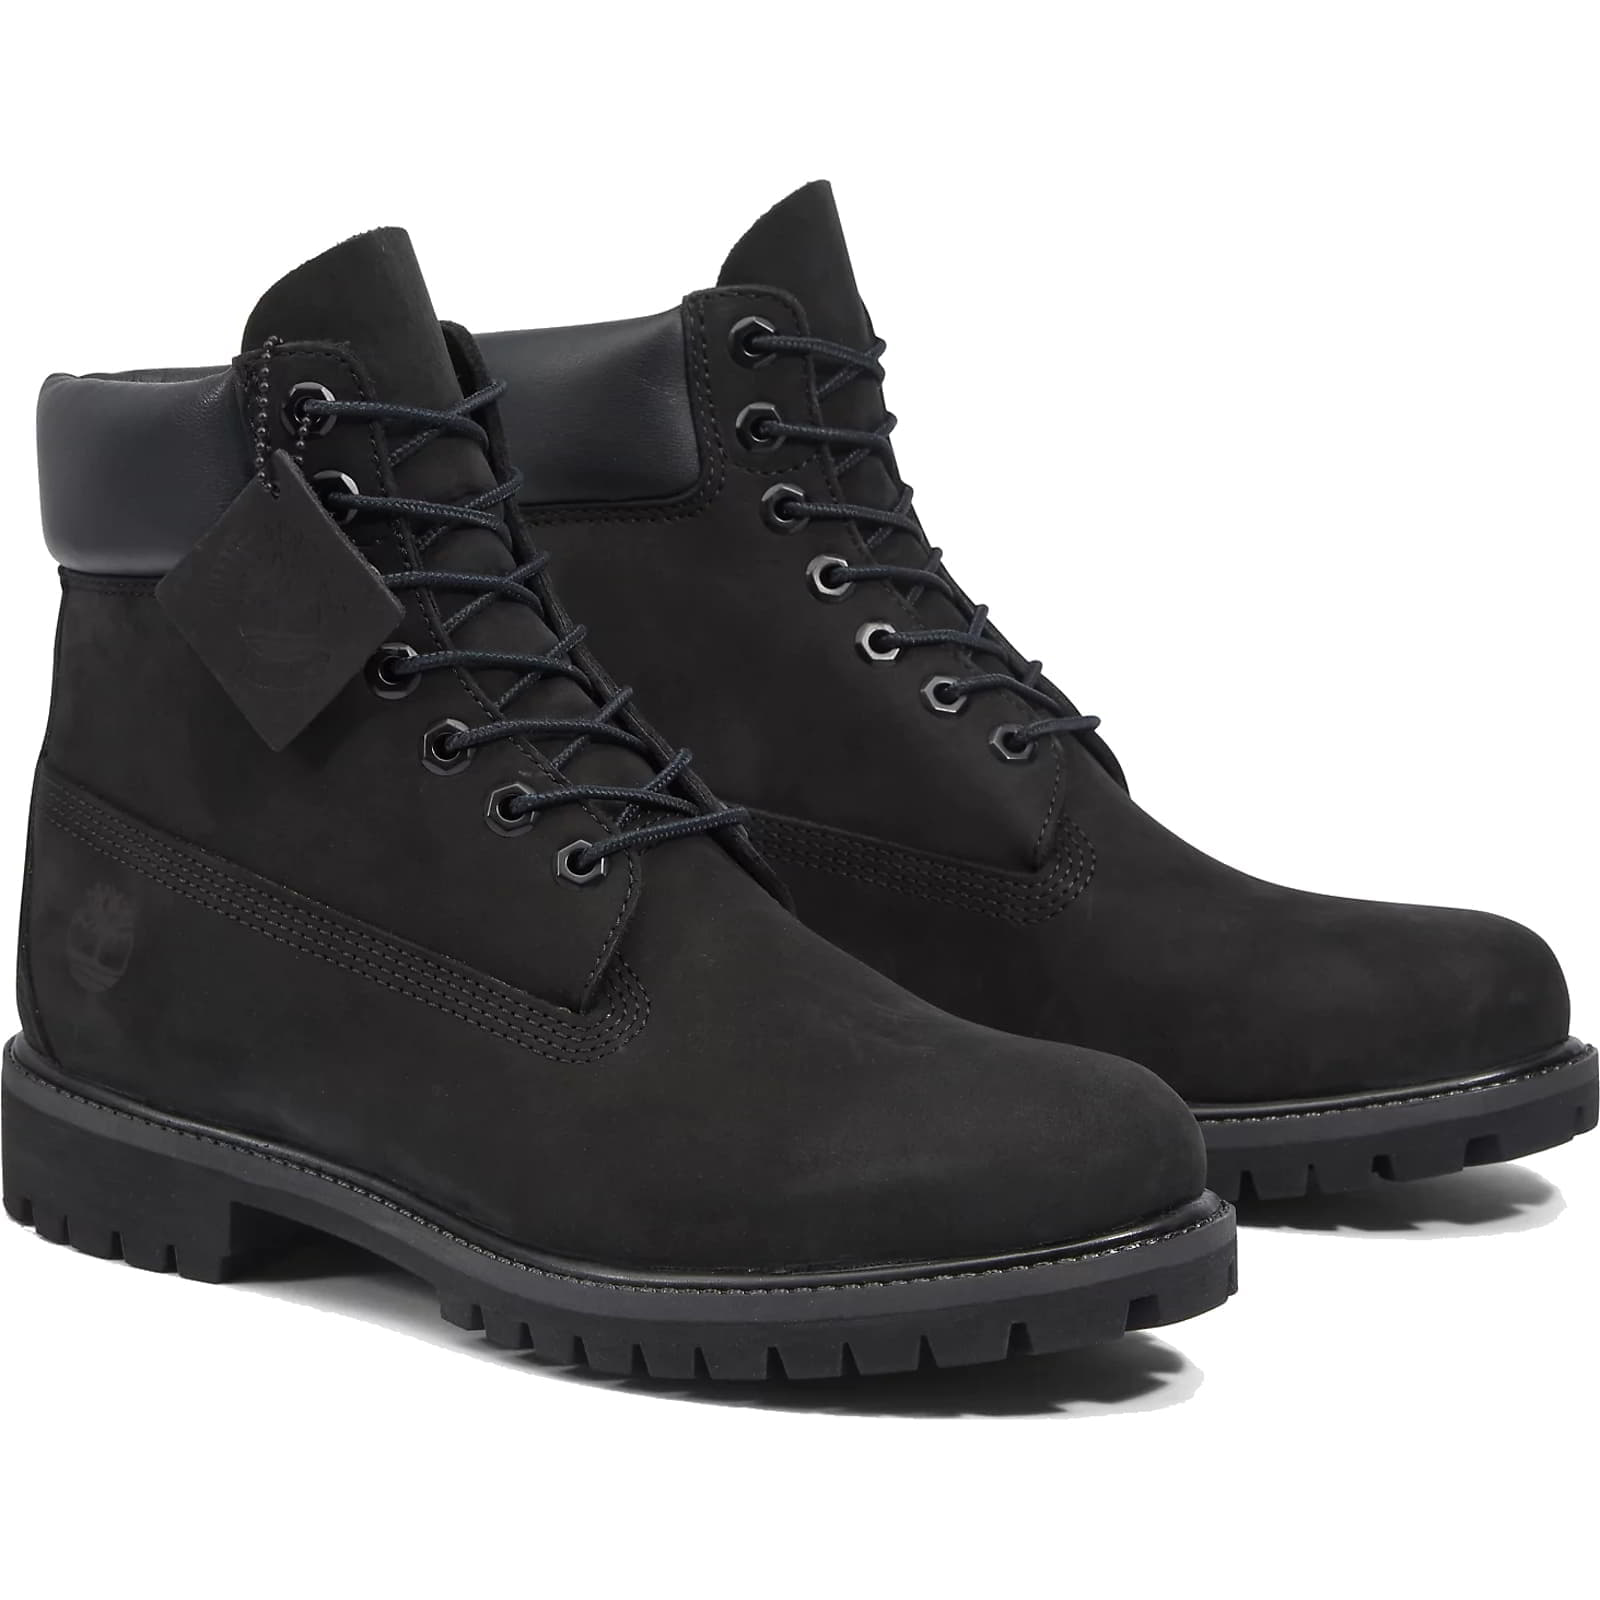 Timberland Men's 6 Inch Premium Black Classic Wide Fit Waterproof Boots - UK 9